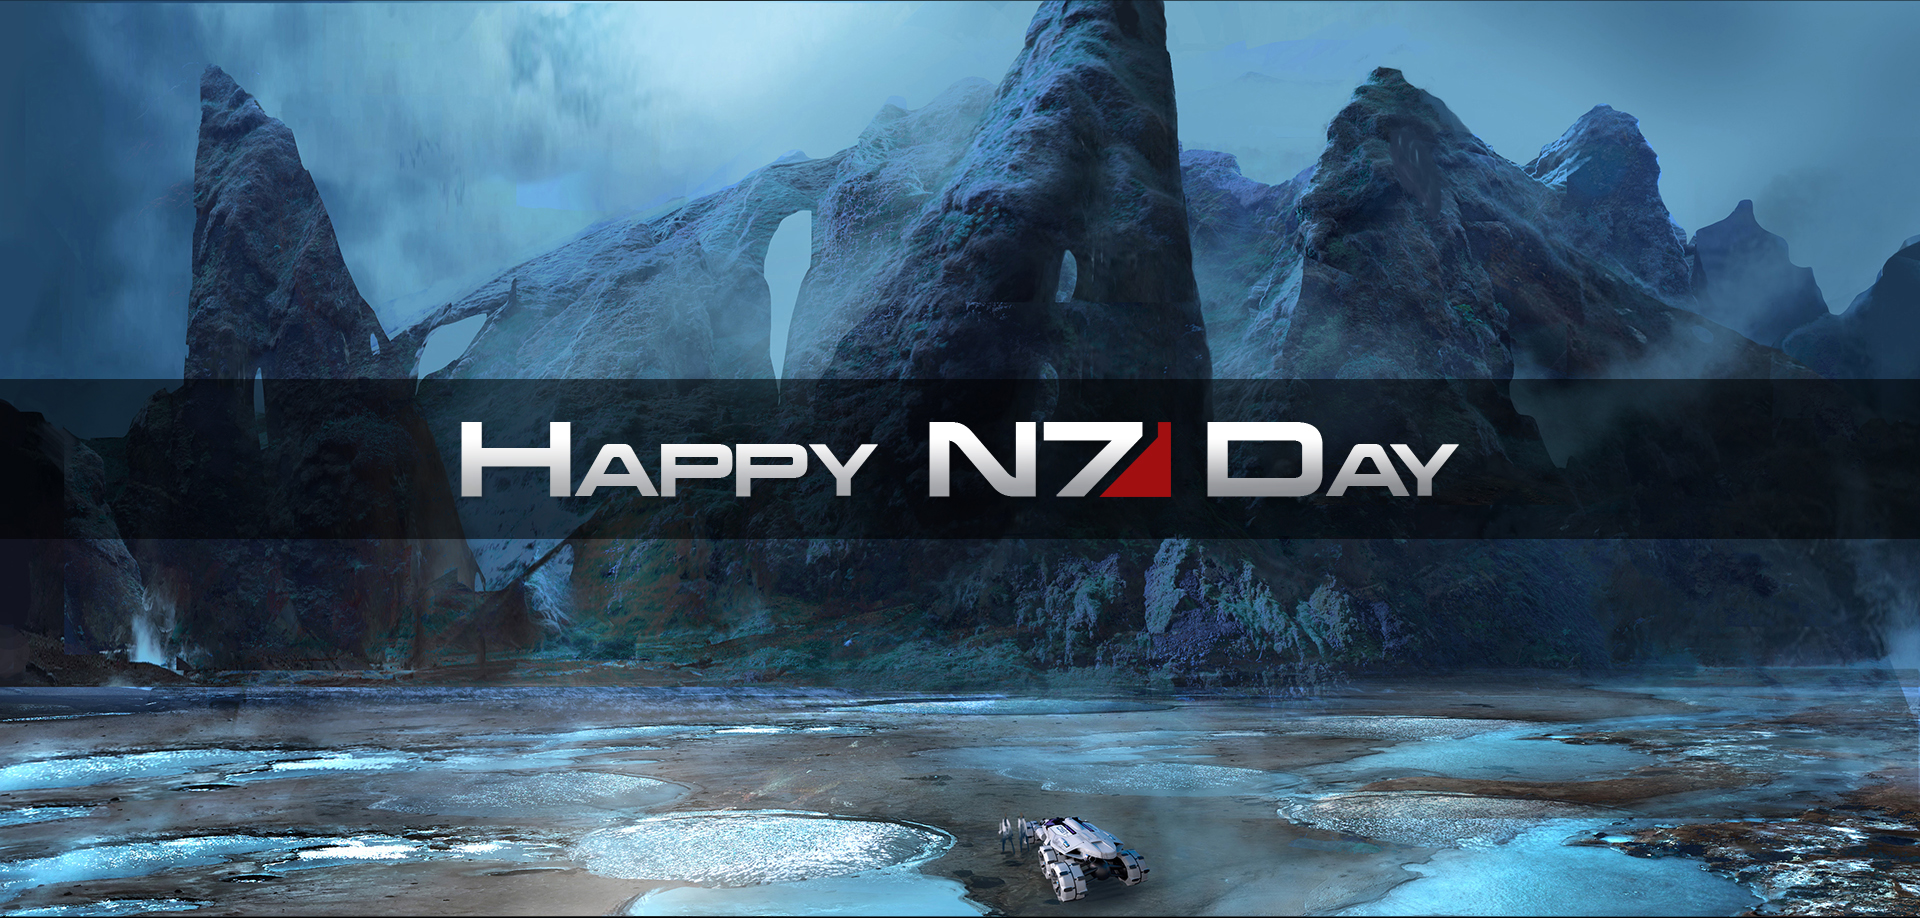 Happy N7 Day!